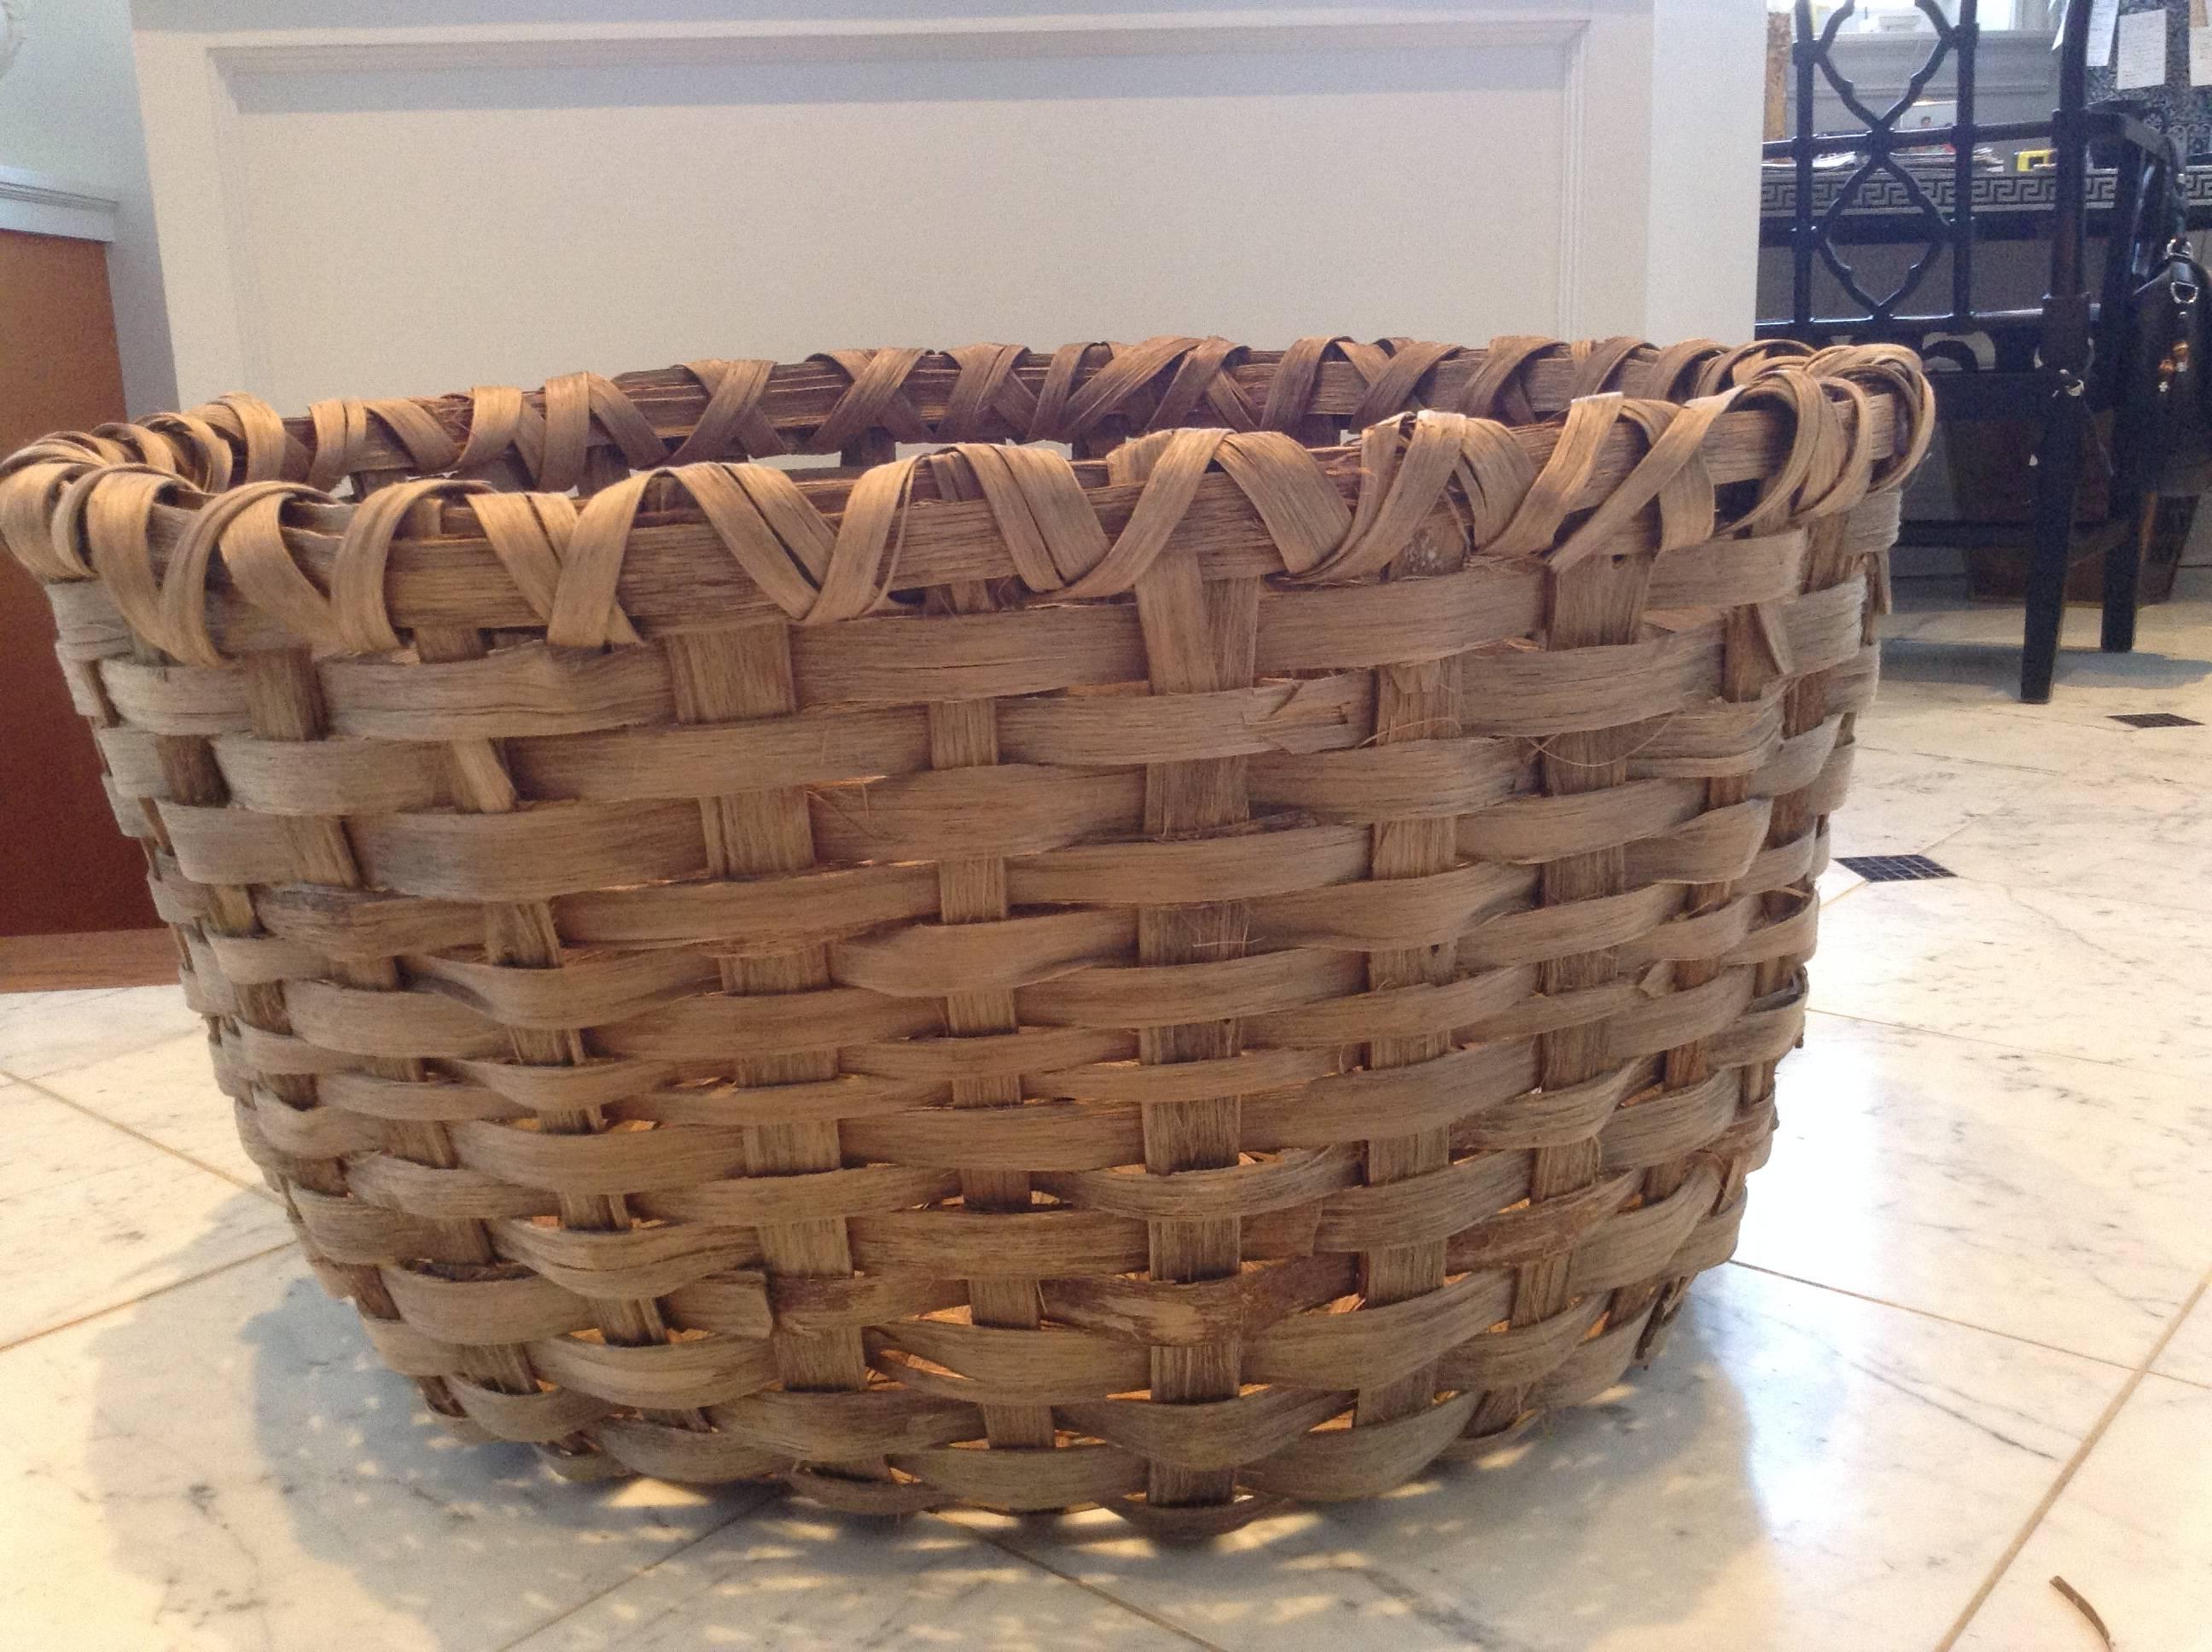 Monumental antique woven splint basket measuring 38